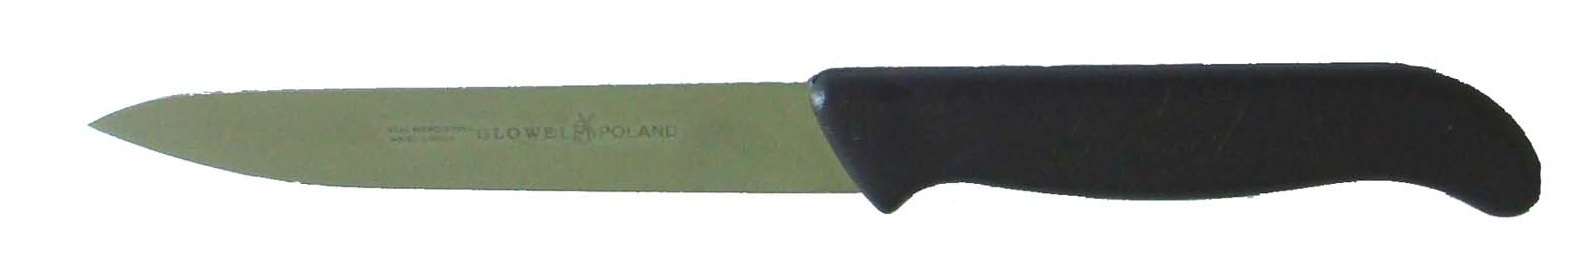 nóż kuchenny L-120 Glowel